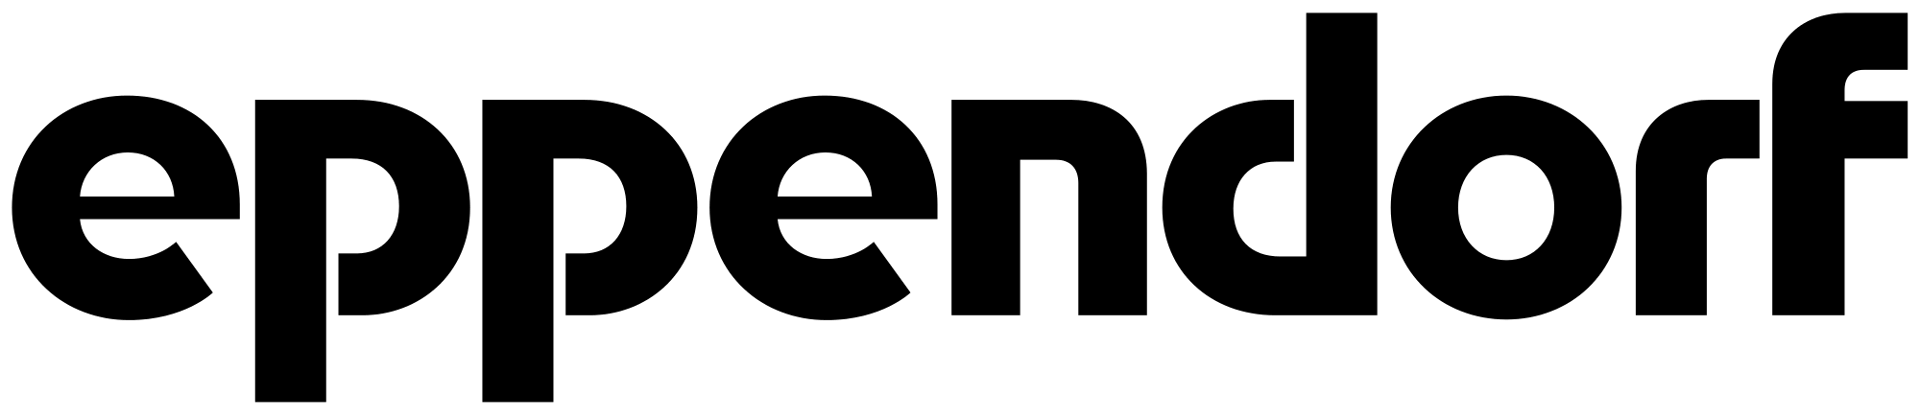 black logo eppendorf